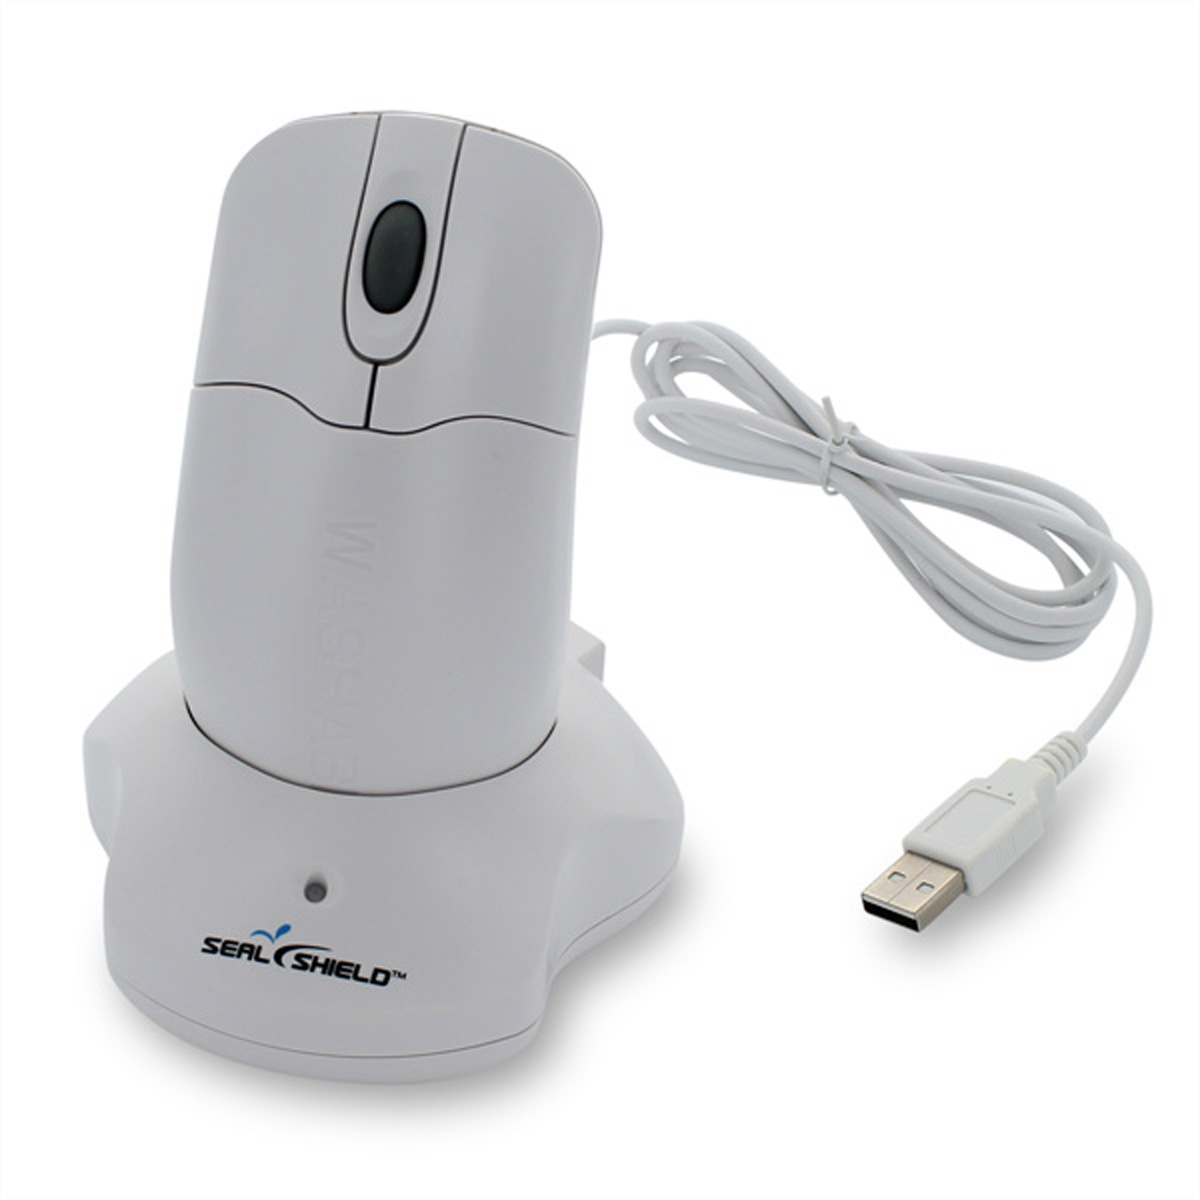 SEAL SHIELD wireless Mouse white STWM042WE 1000dpi